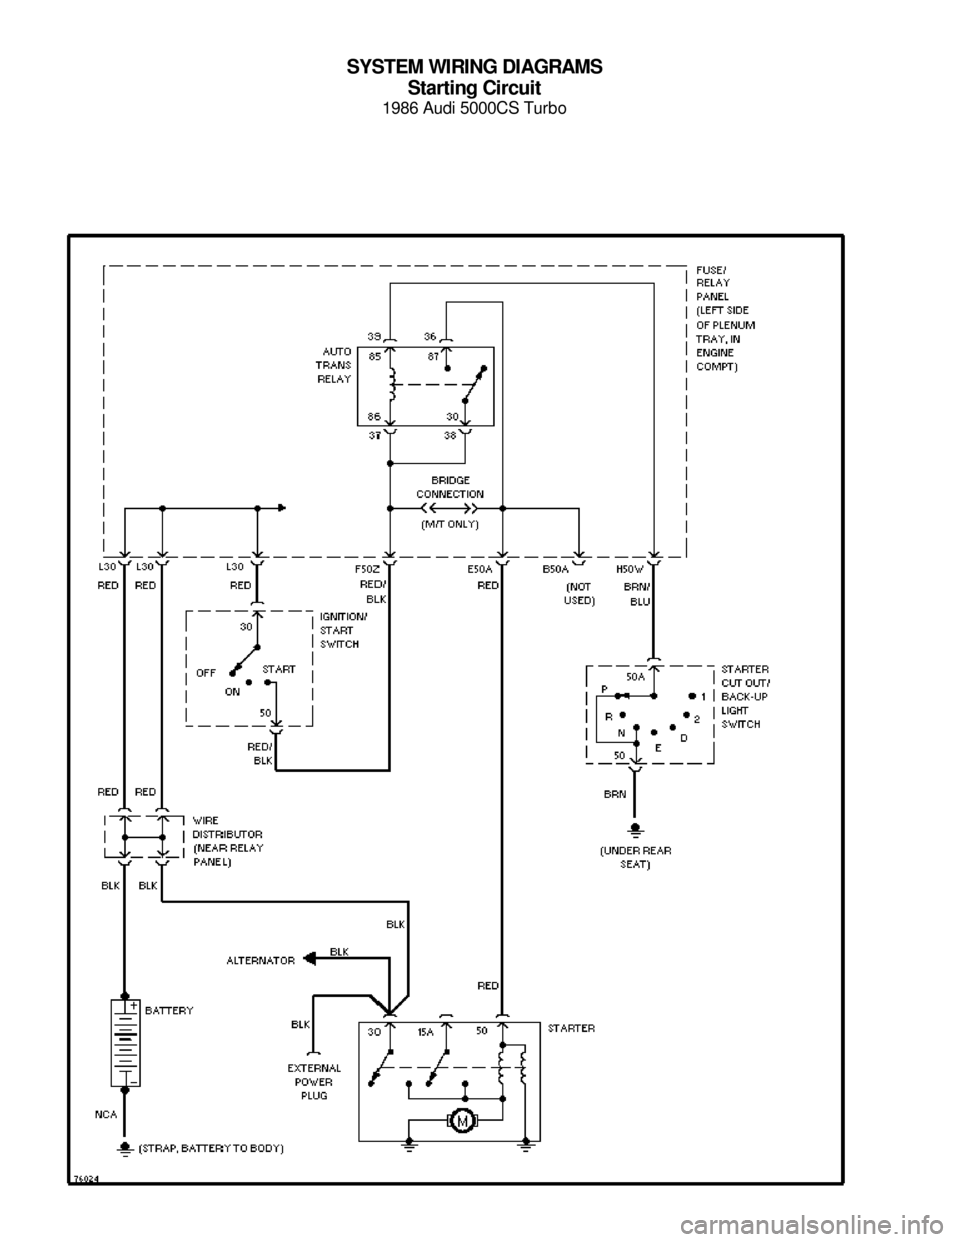 AUDI 5000CS 1986 C2 System Wiring Diagram SYSTEM WIRING DIAGRAMS
Starting Circuit
1986 Audi 5000CS Turbo
For x    
Copyright © 1998 Mitchell Repair Information Company, LLCMonday, July 19, 2004  05:53PM 